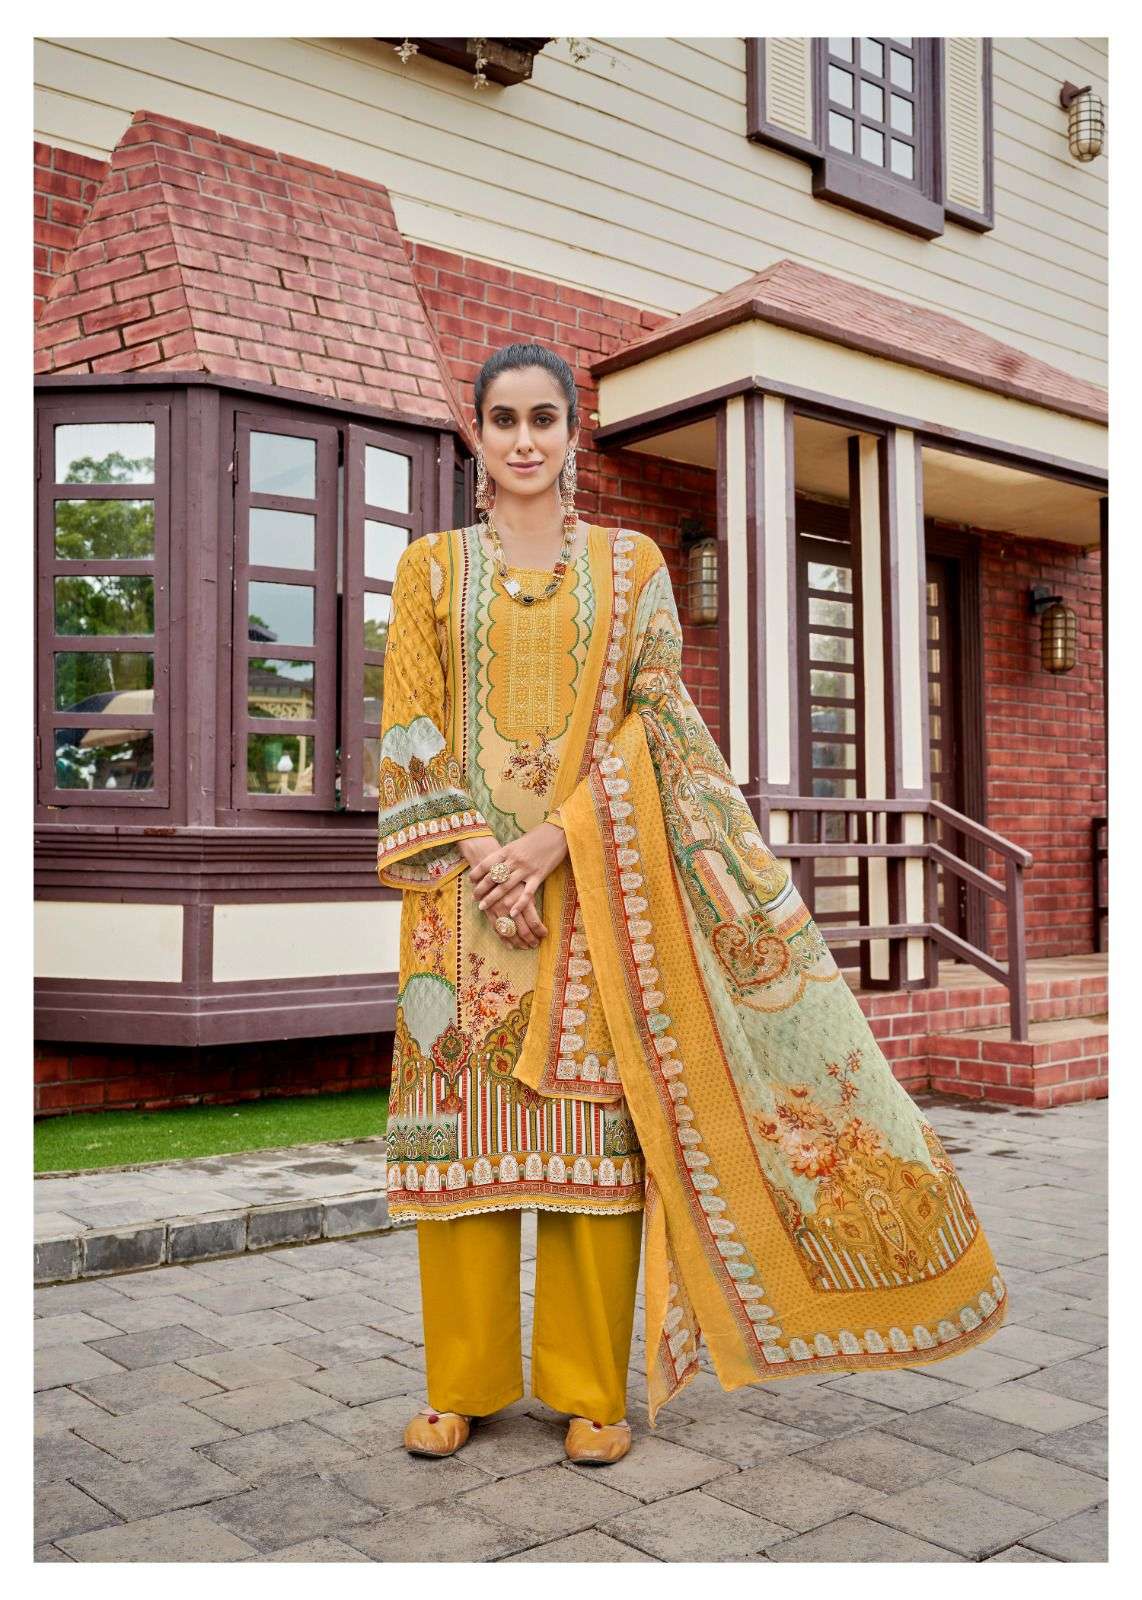 AASHIRWAD AZA FANCY SALWAR SUIT, Salwar Suit, Designer Salwar Suit, Women  Salwar Suits, महिलाओं का सूट सलवार - Anant Tex Exports Private Limited,  Surat | ID: 2849753621597